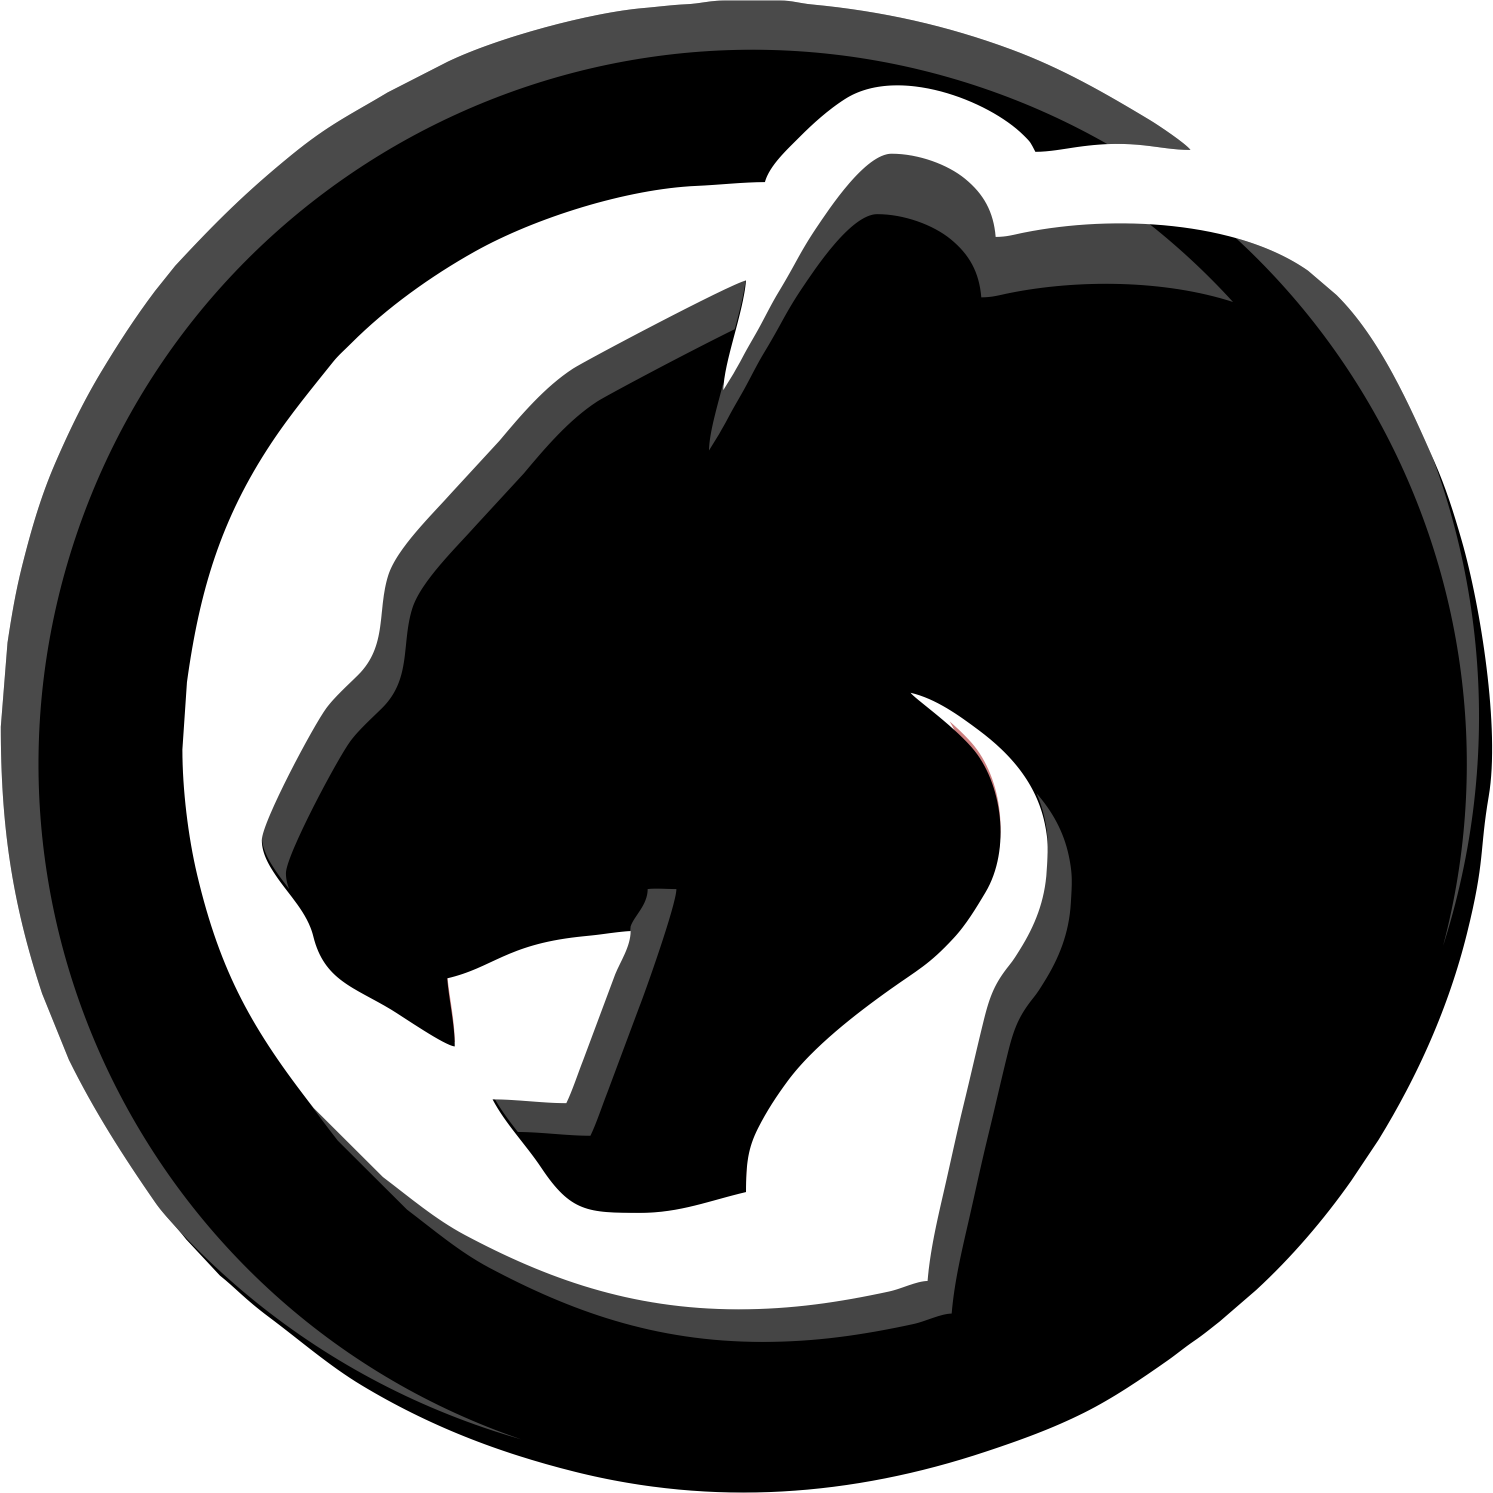 Avengers black panther logo PNG Gambar berkualitas tinggi